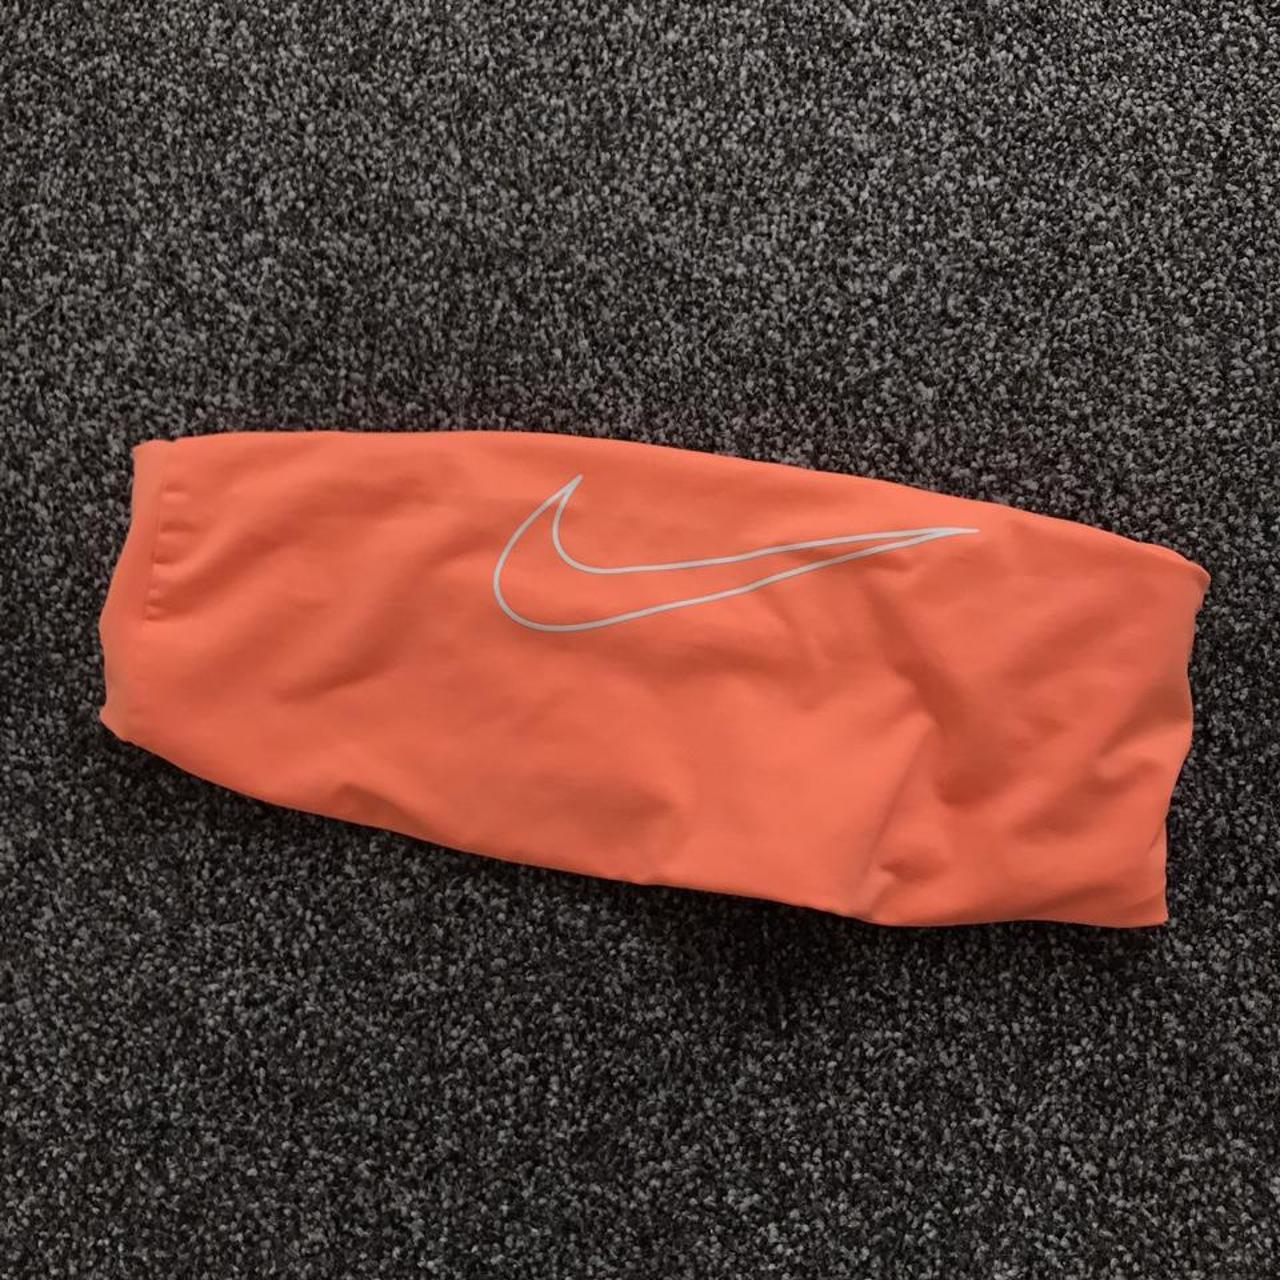 Bandeau Nike SWOOSH Orange 